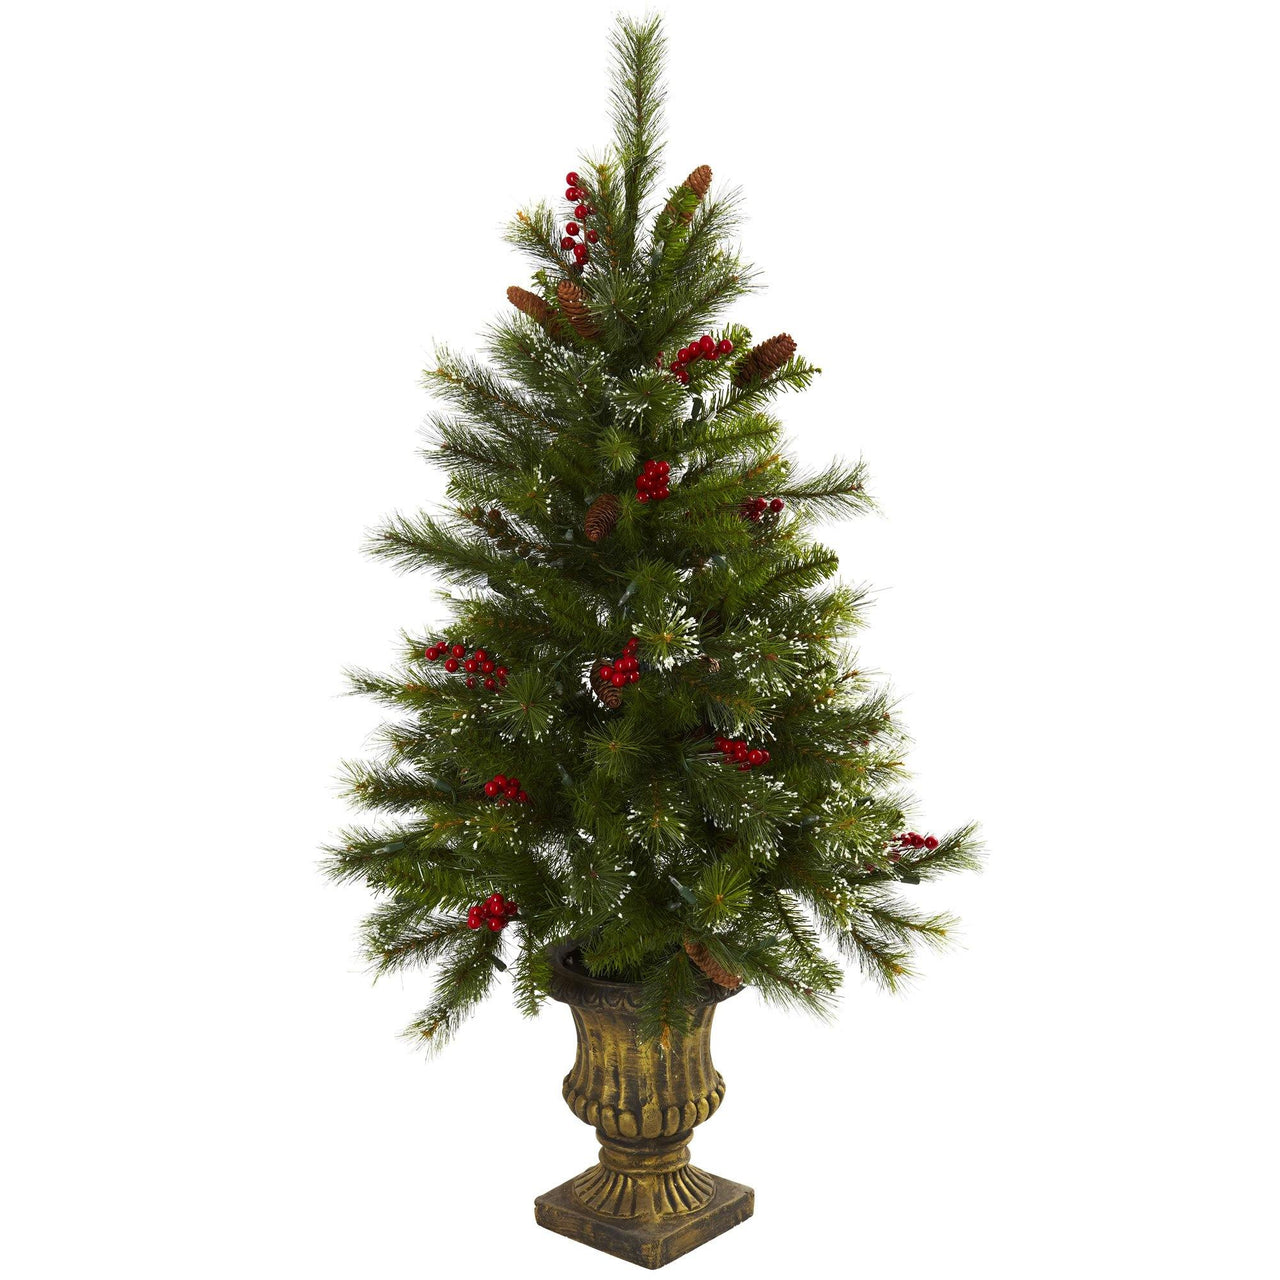 4’ Christmas Tree w/Berries, Pine Cones, LED Lights & Decorative Urn - The Fox Decor